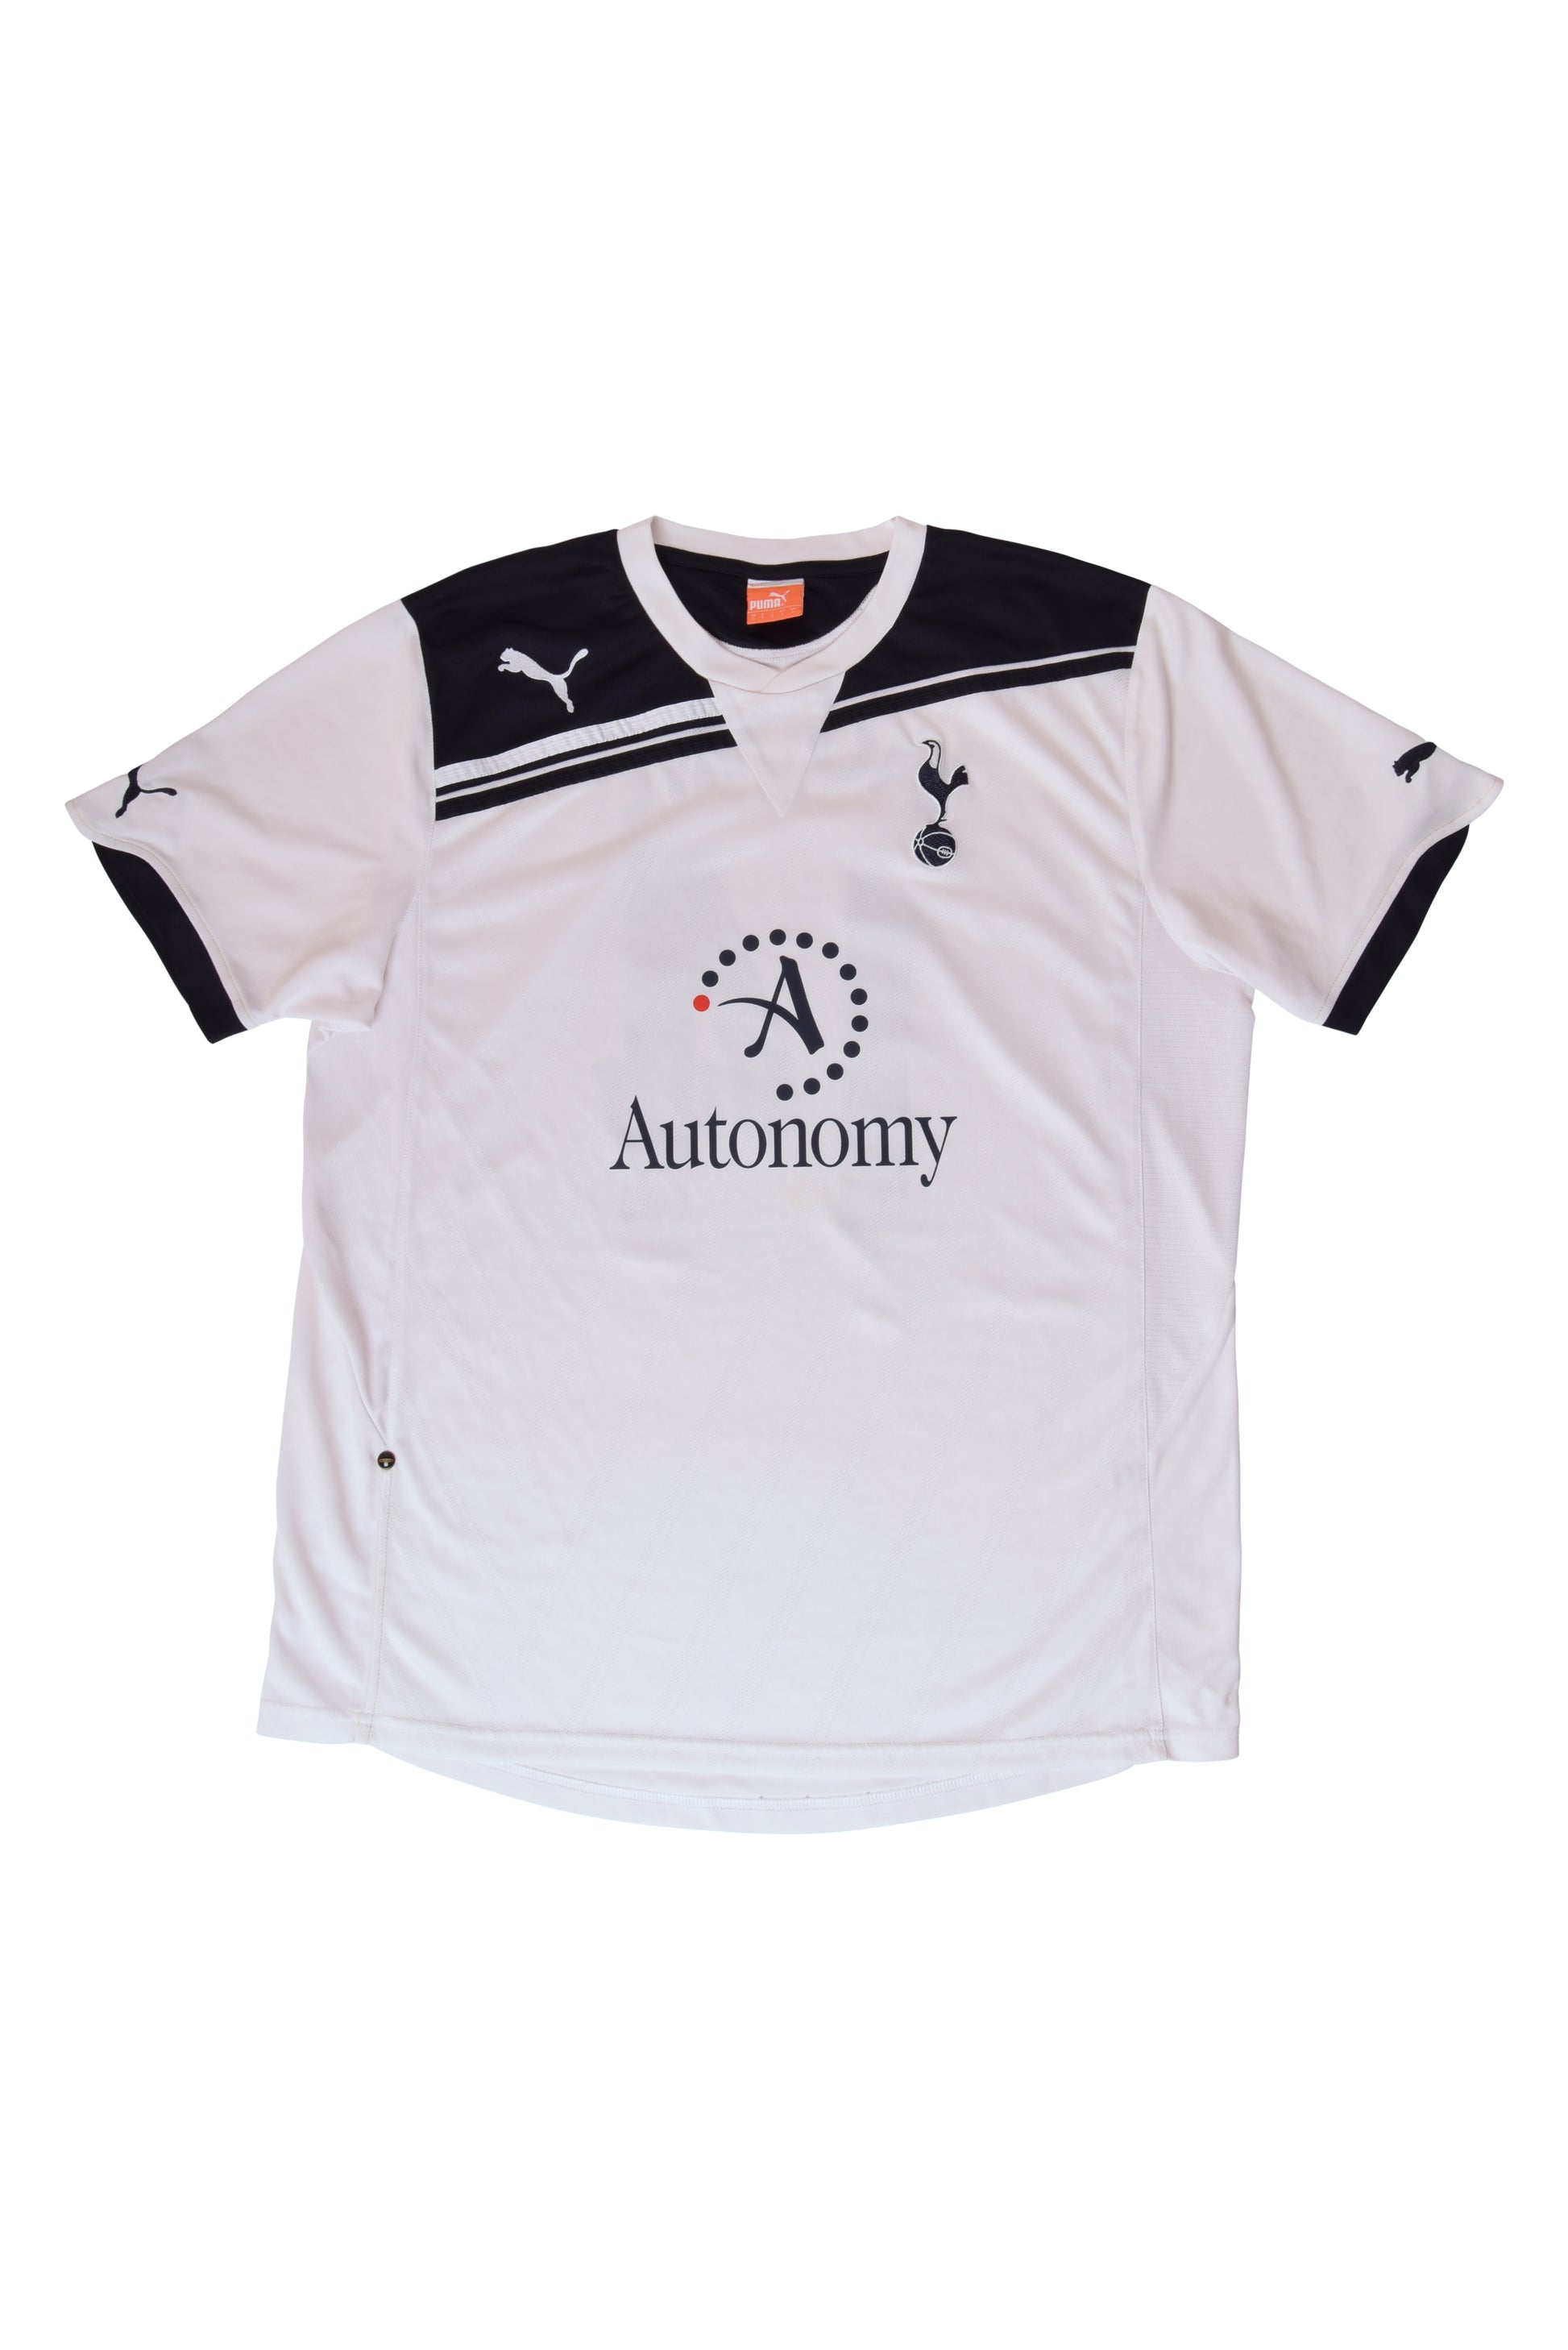 Tottenham Hotspurs Modric #14 Puma 2010-2011 Size L Autonomy White